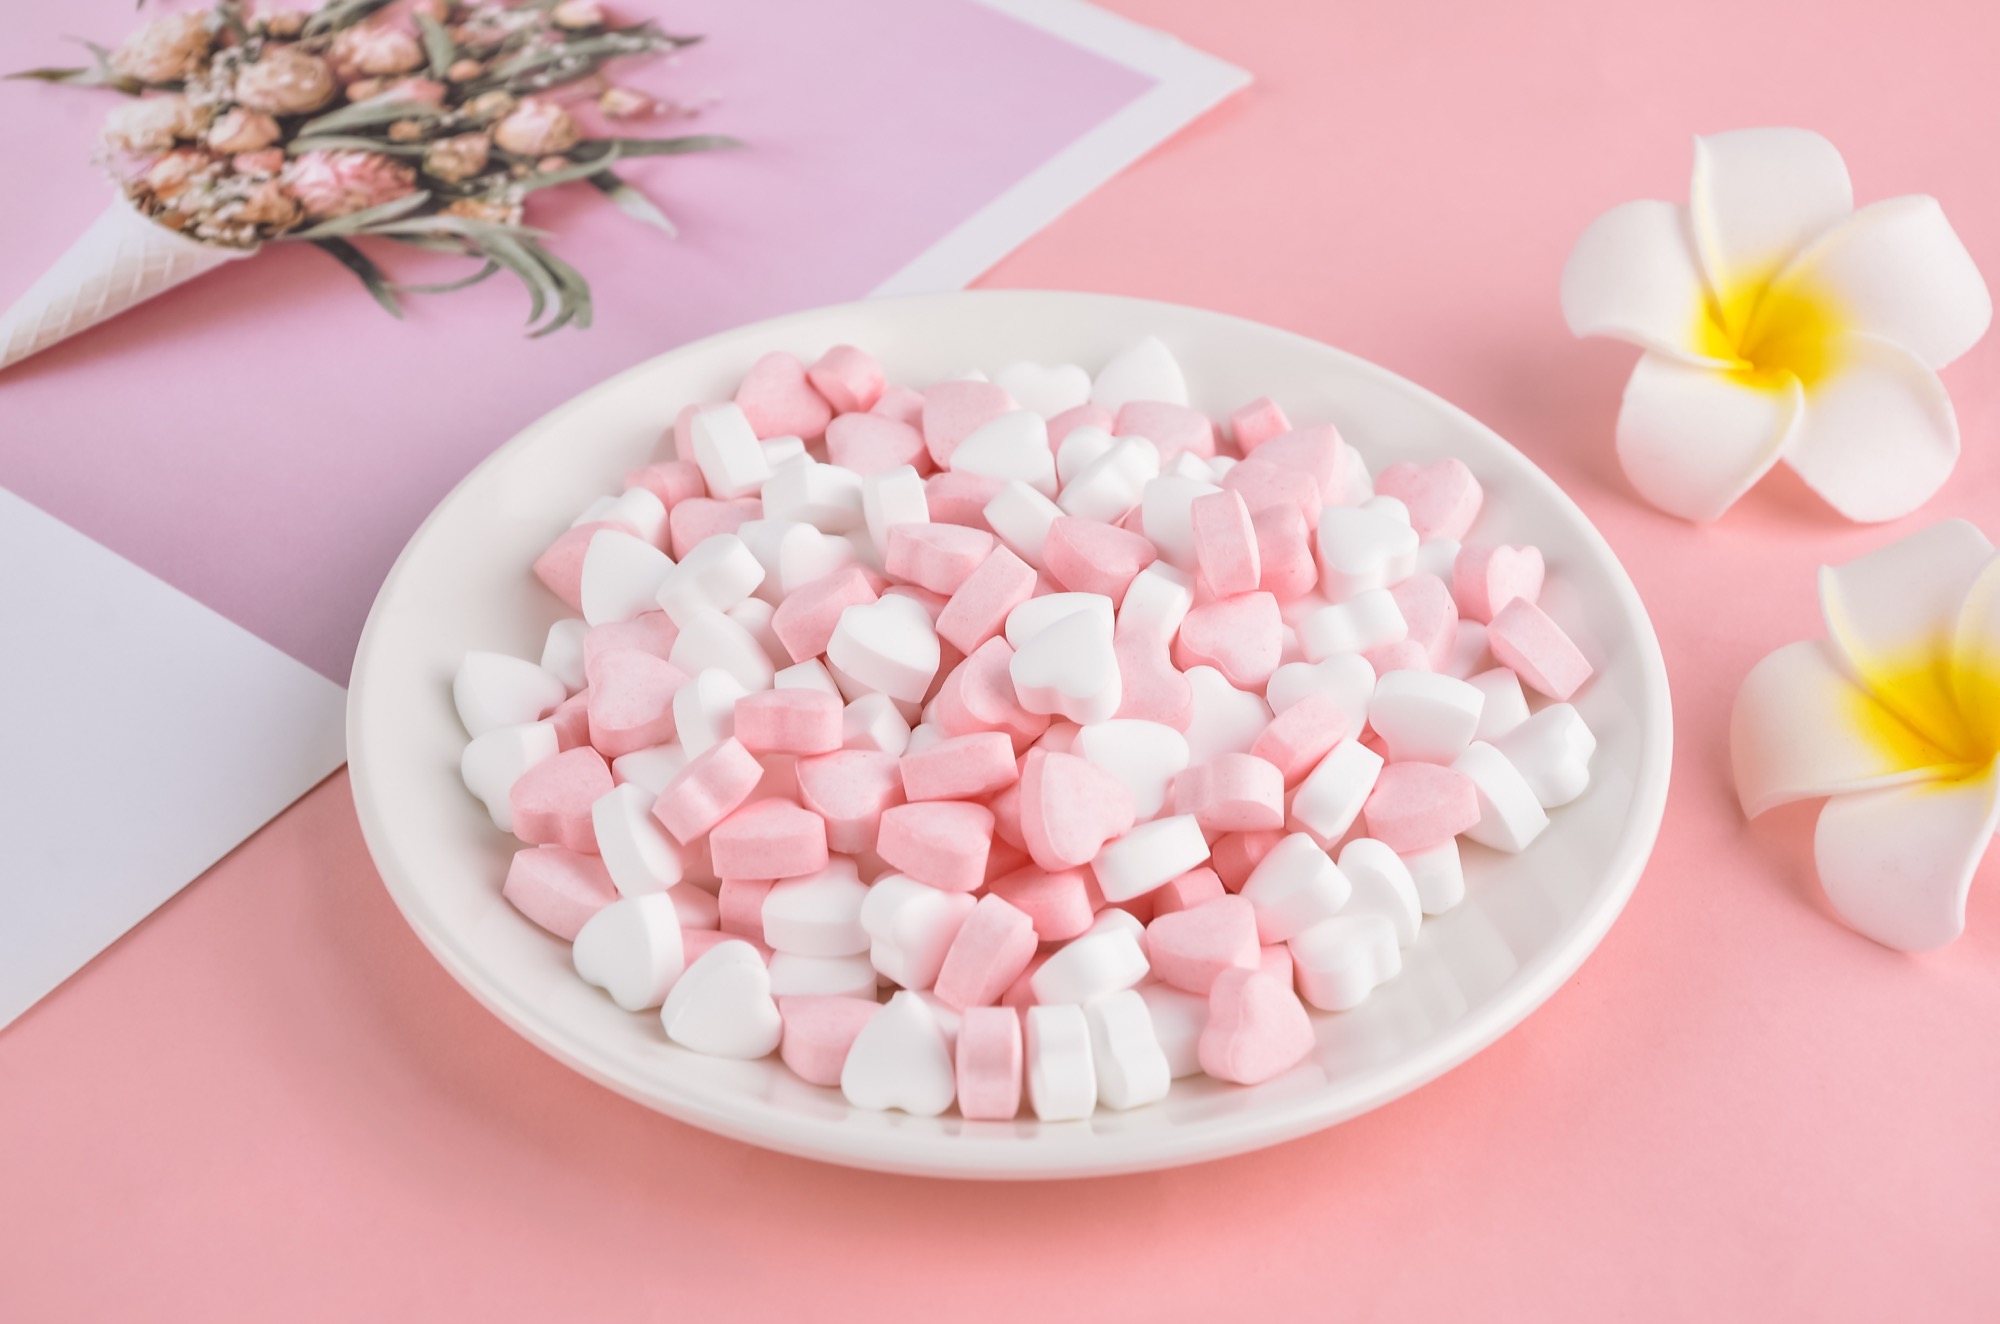 Heart shaped Mints/Candy